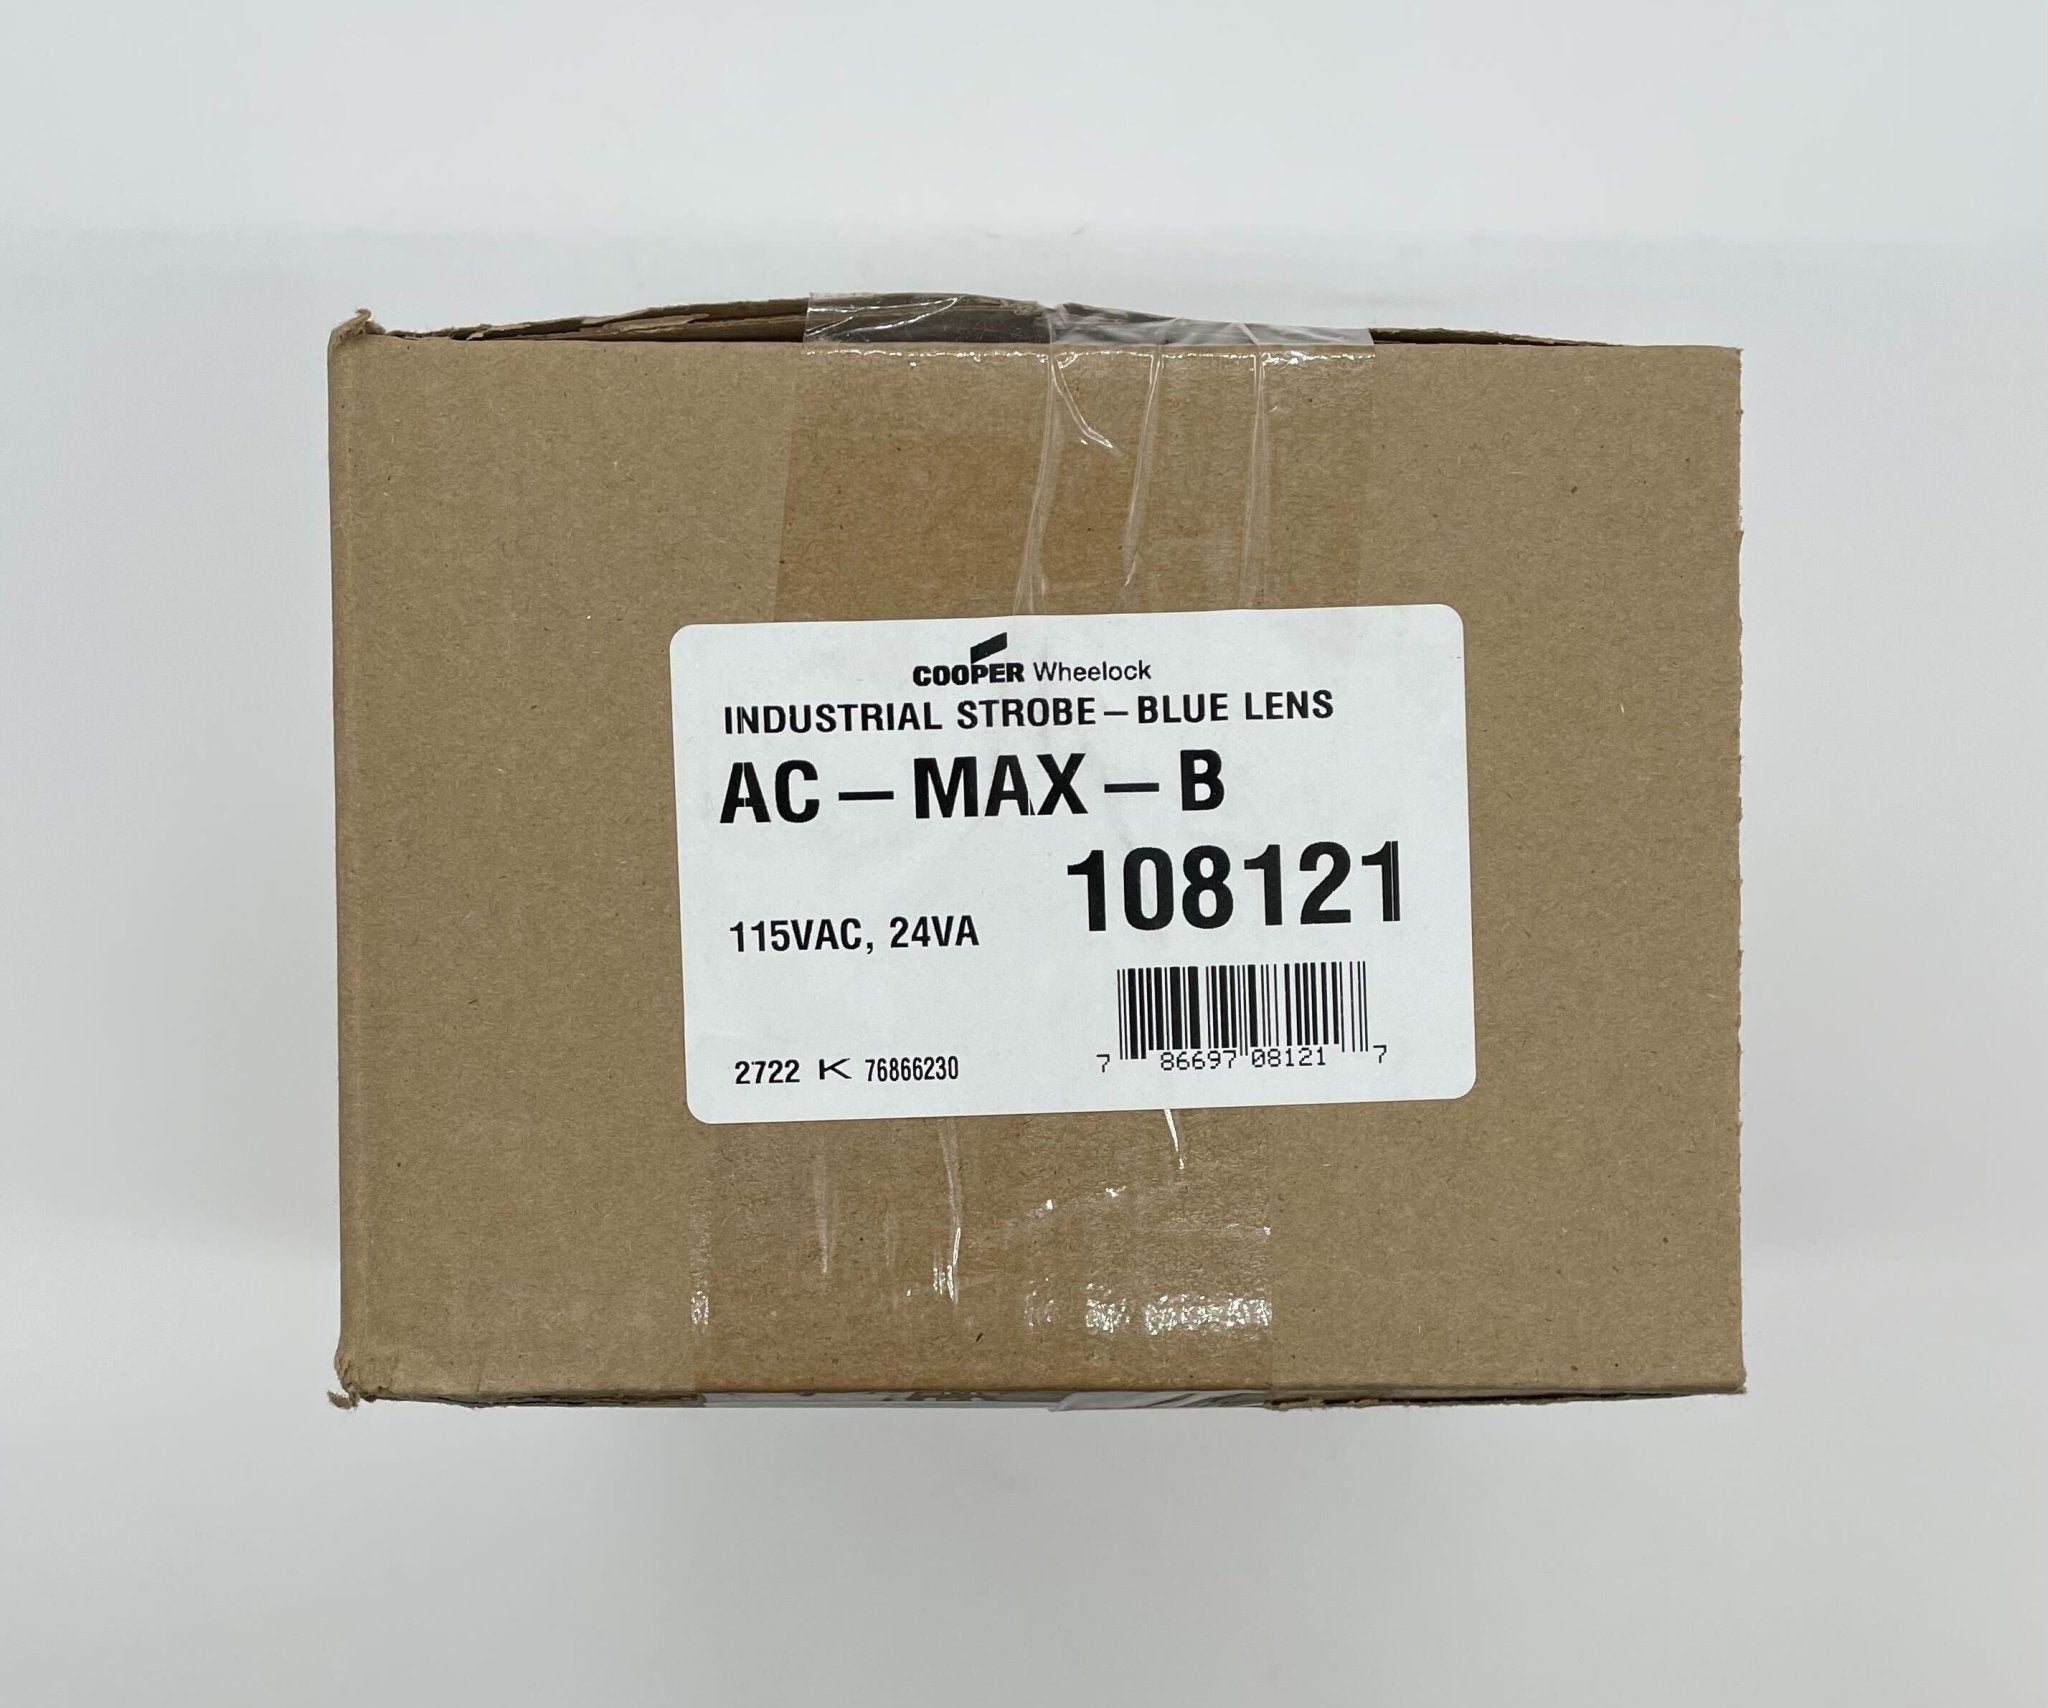 Wheelock AC-MAX-B - The Fire Alarm Supplier